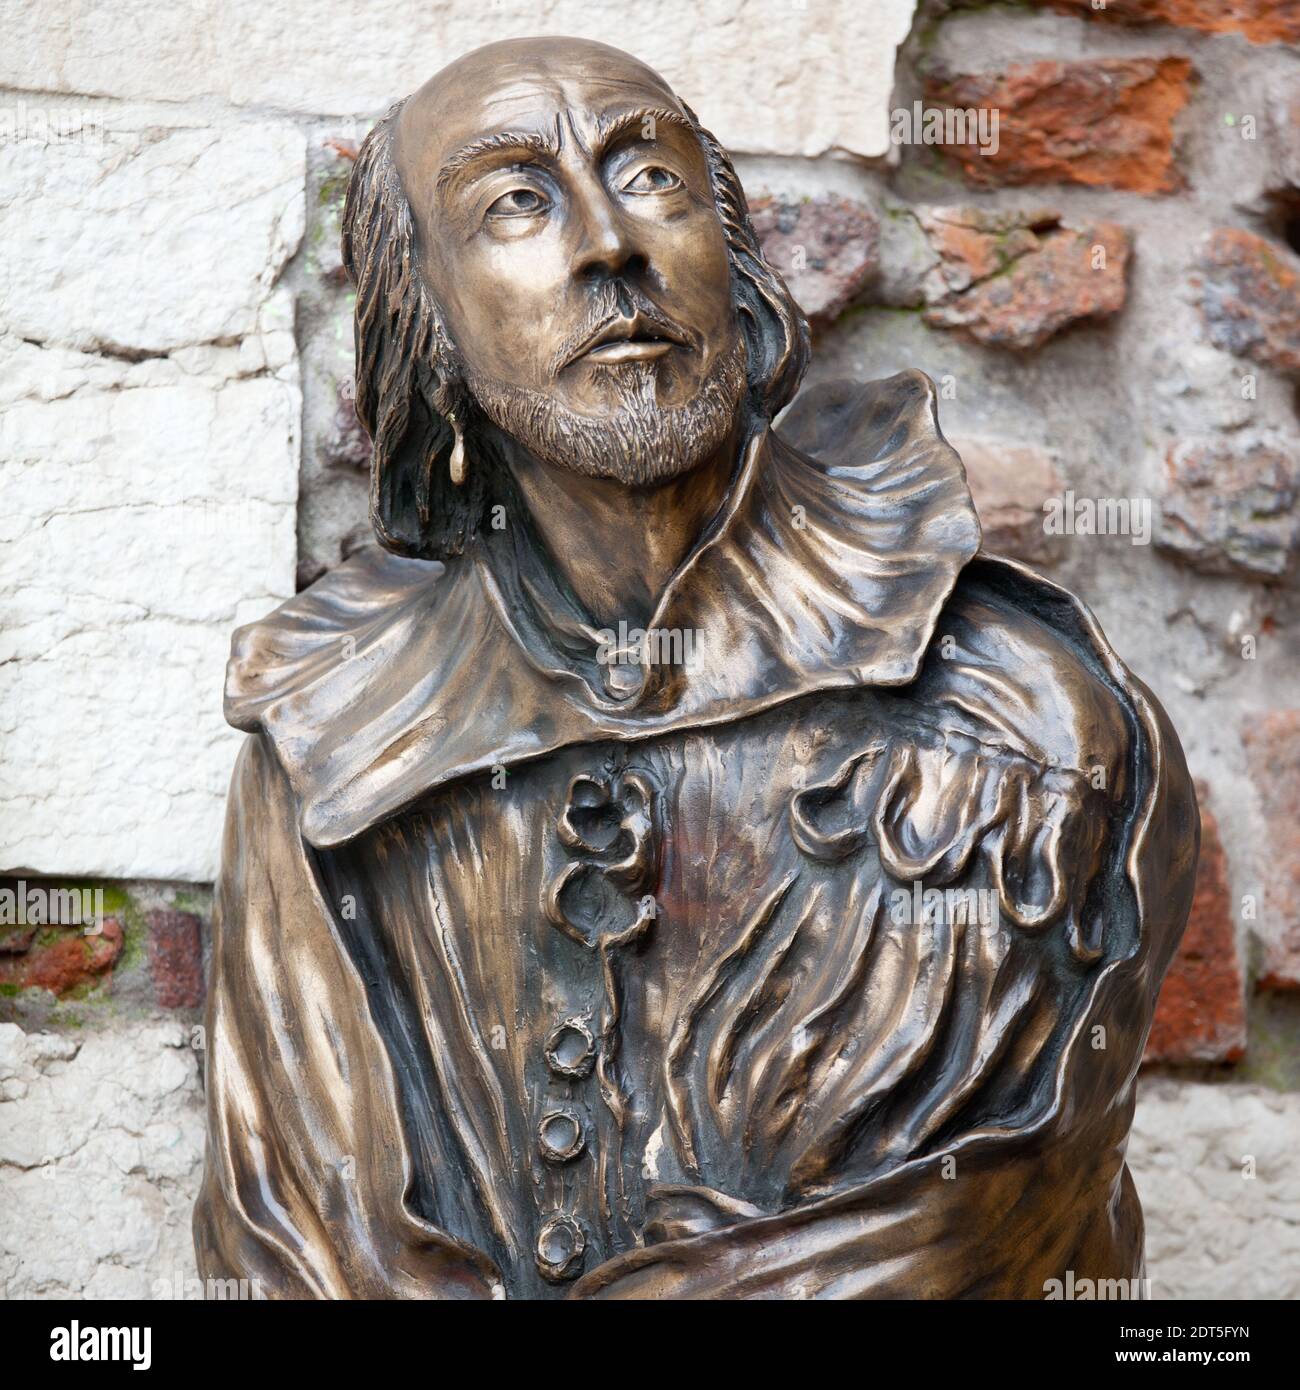 Veronese Poet BГјste Deko Statue William Shakespeare BГјste 